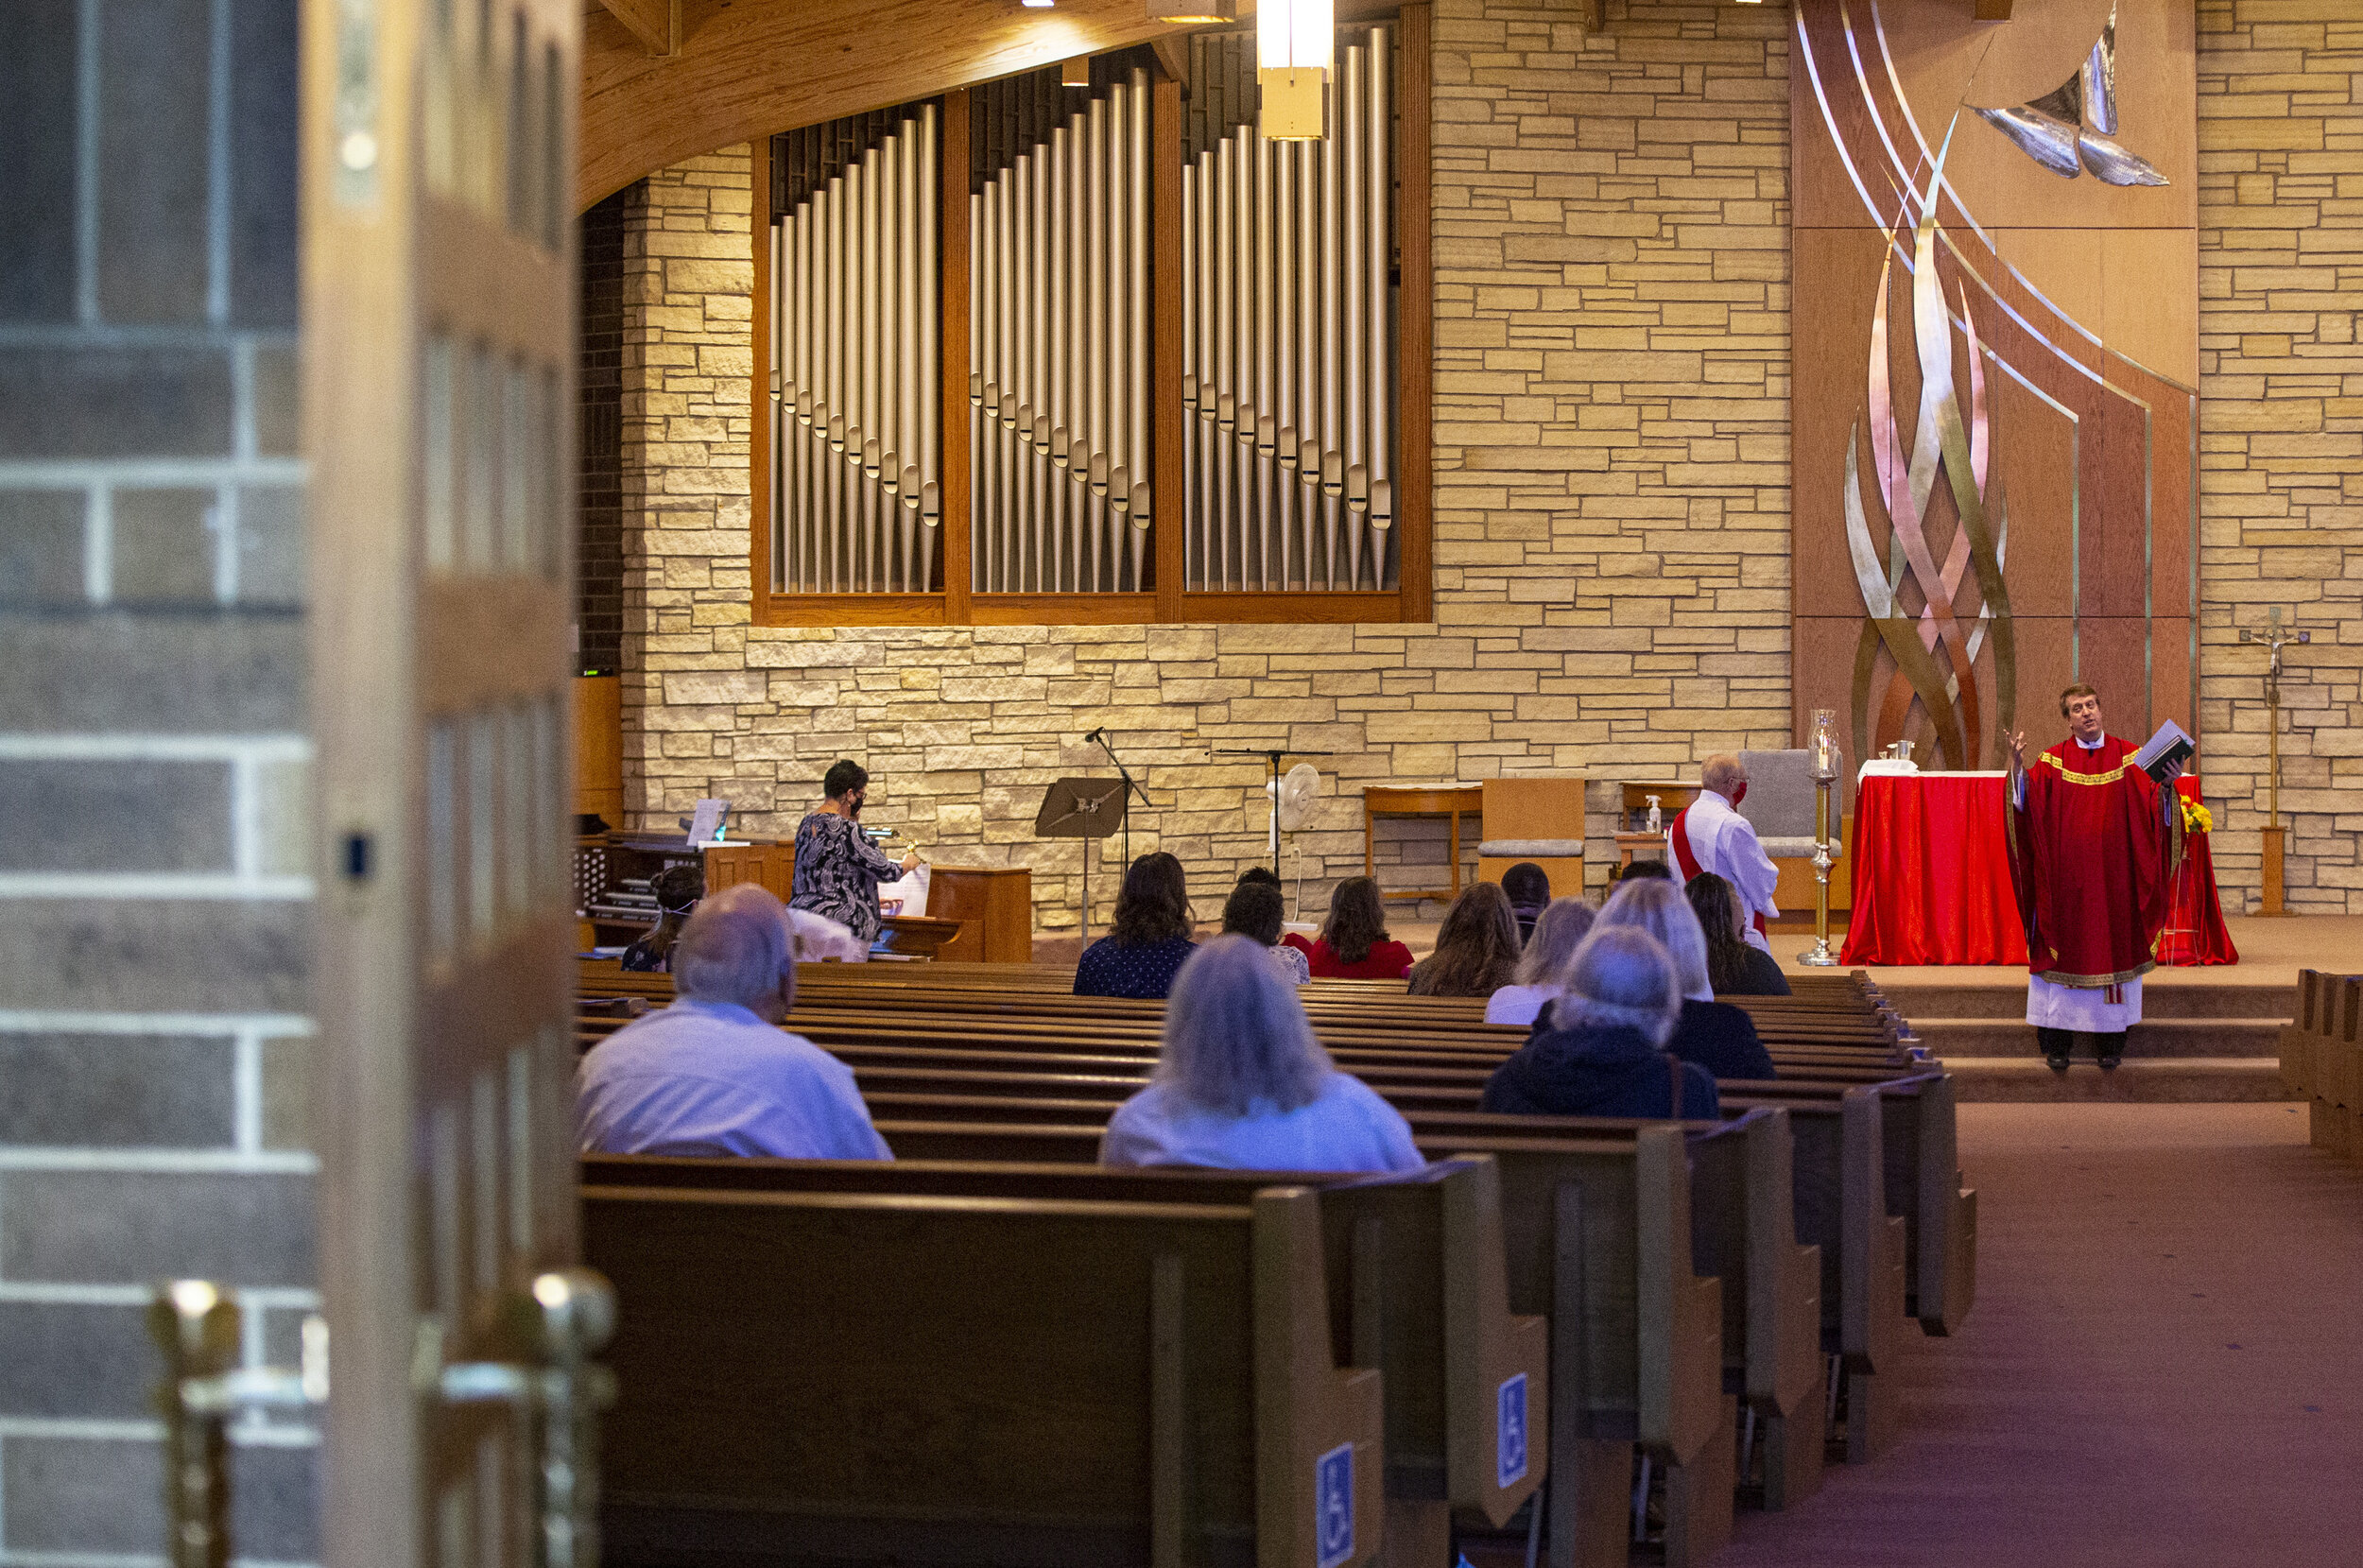  Rev. Mark Murphy begins mass at St. Jude’s Catholic Church in Cedar Rapids on Sunday.  